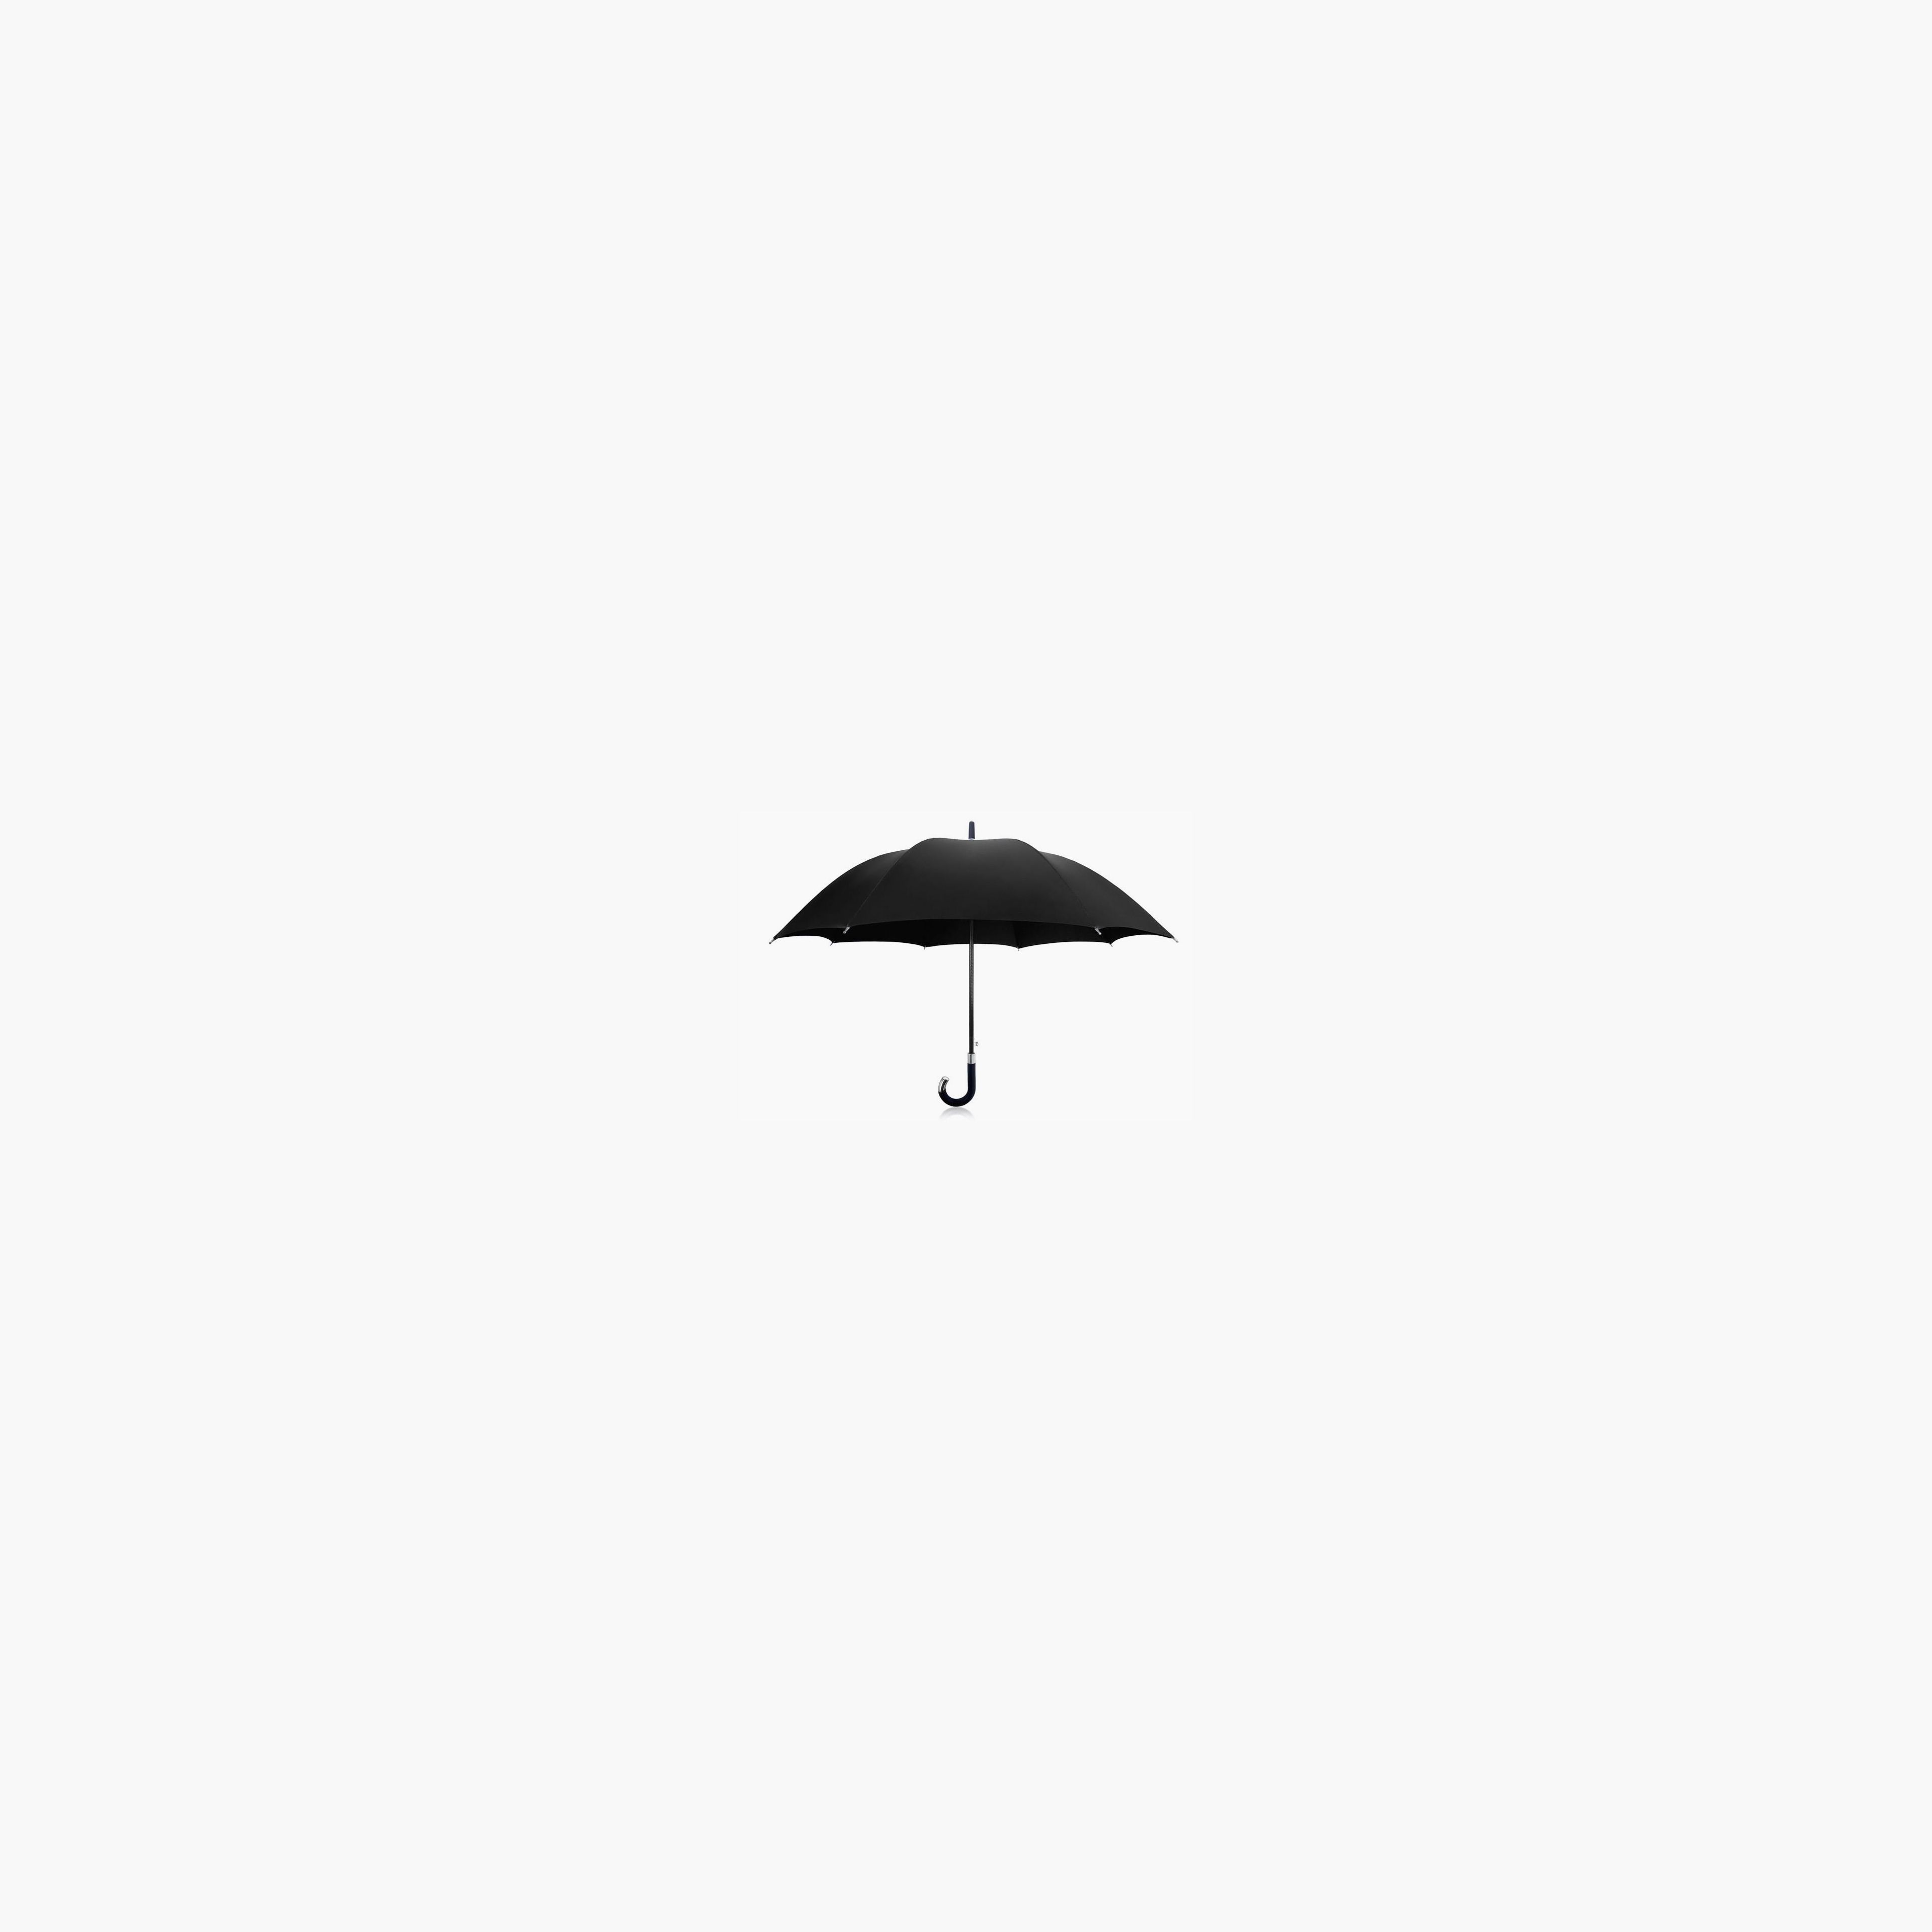 THE DAVEK ELITE - Our classic cane umbrella